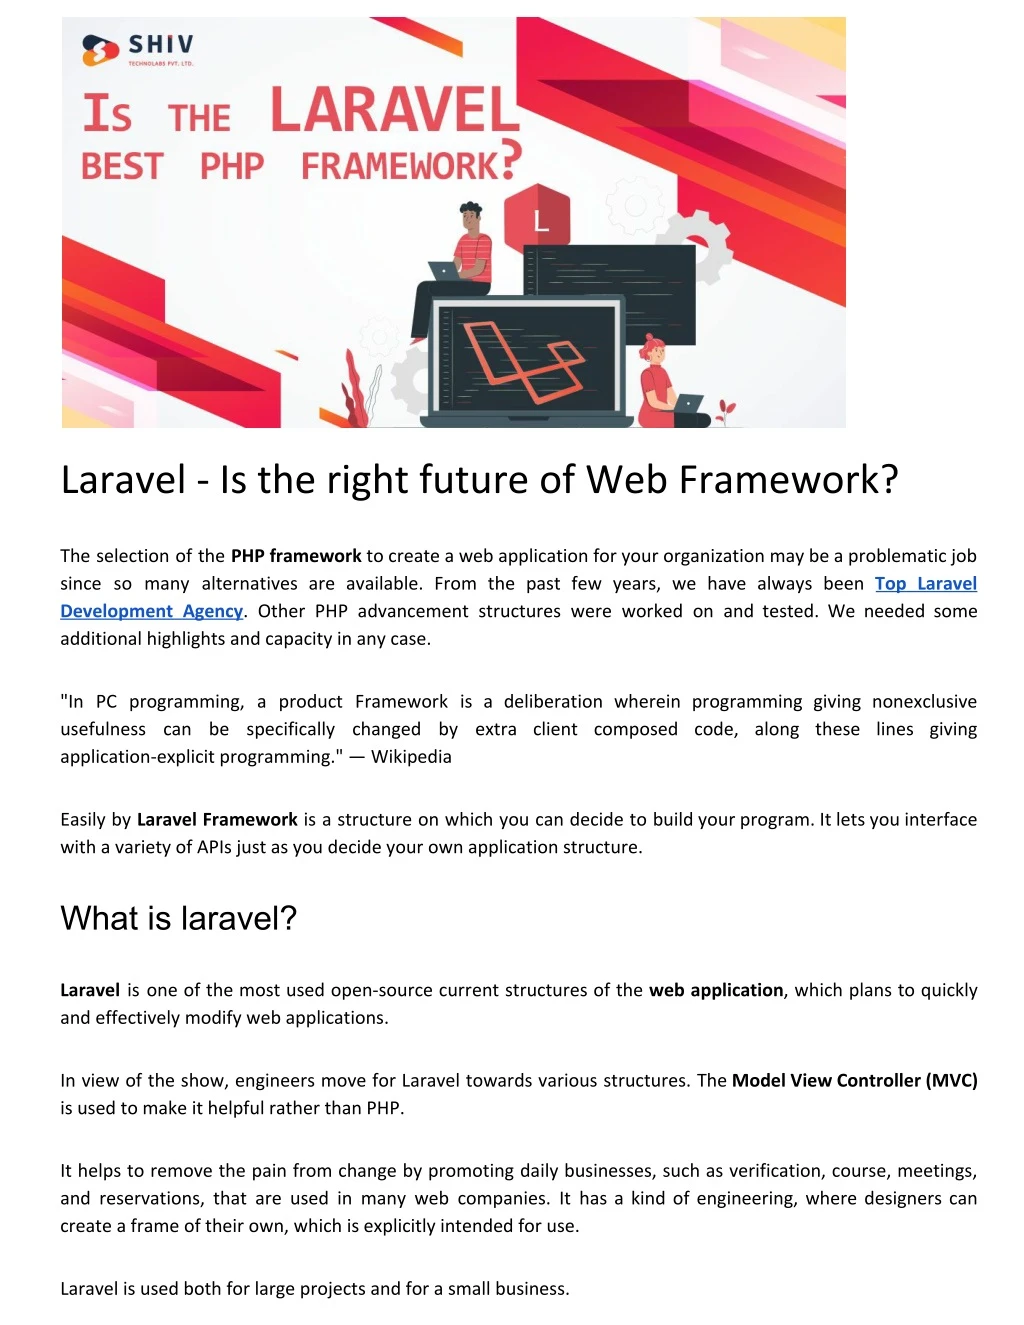 laravel is the right future of web framework